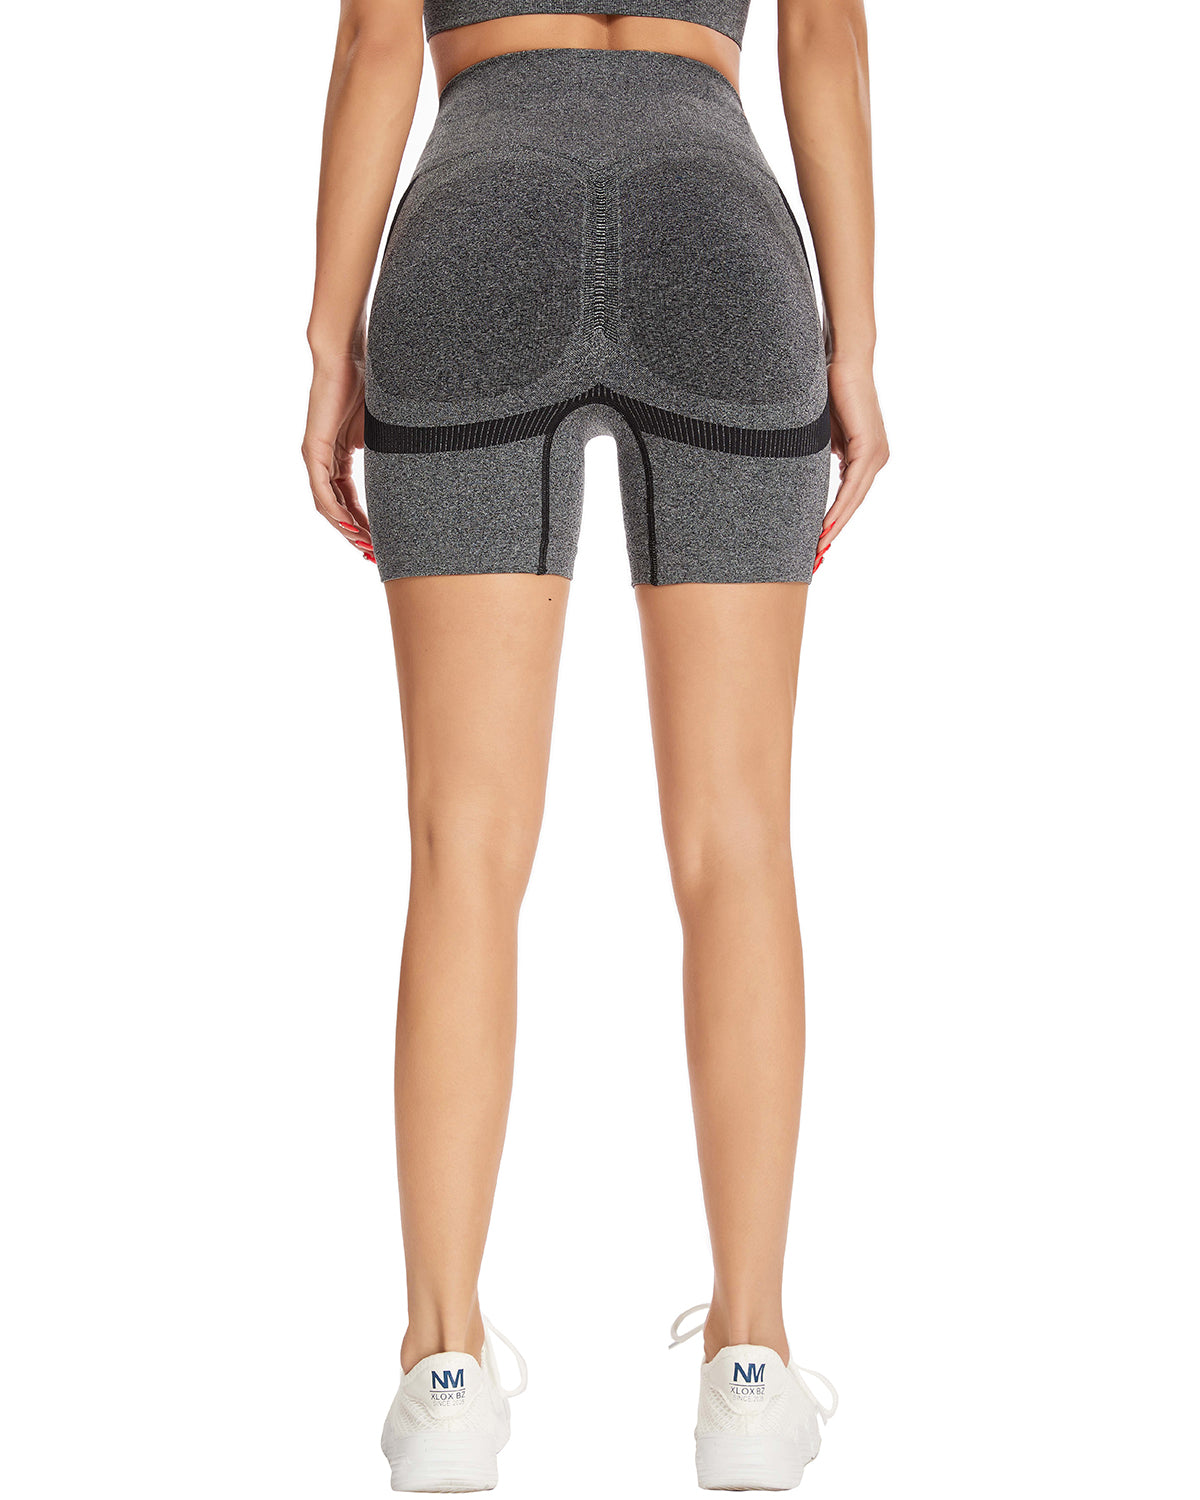 Xega Seamless Shorts - Grey